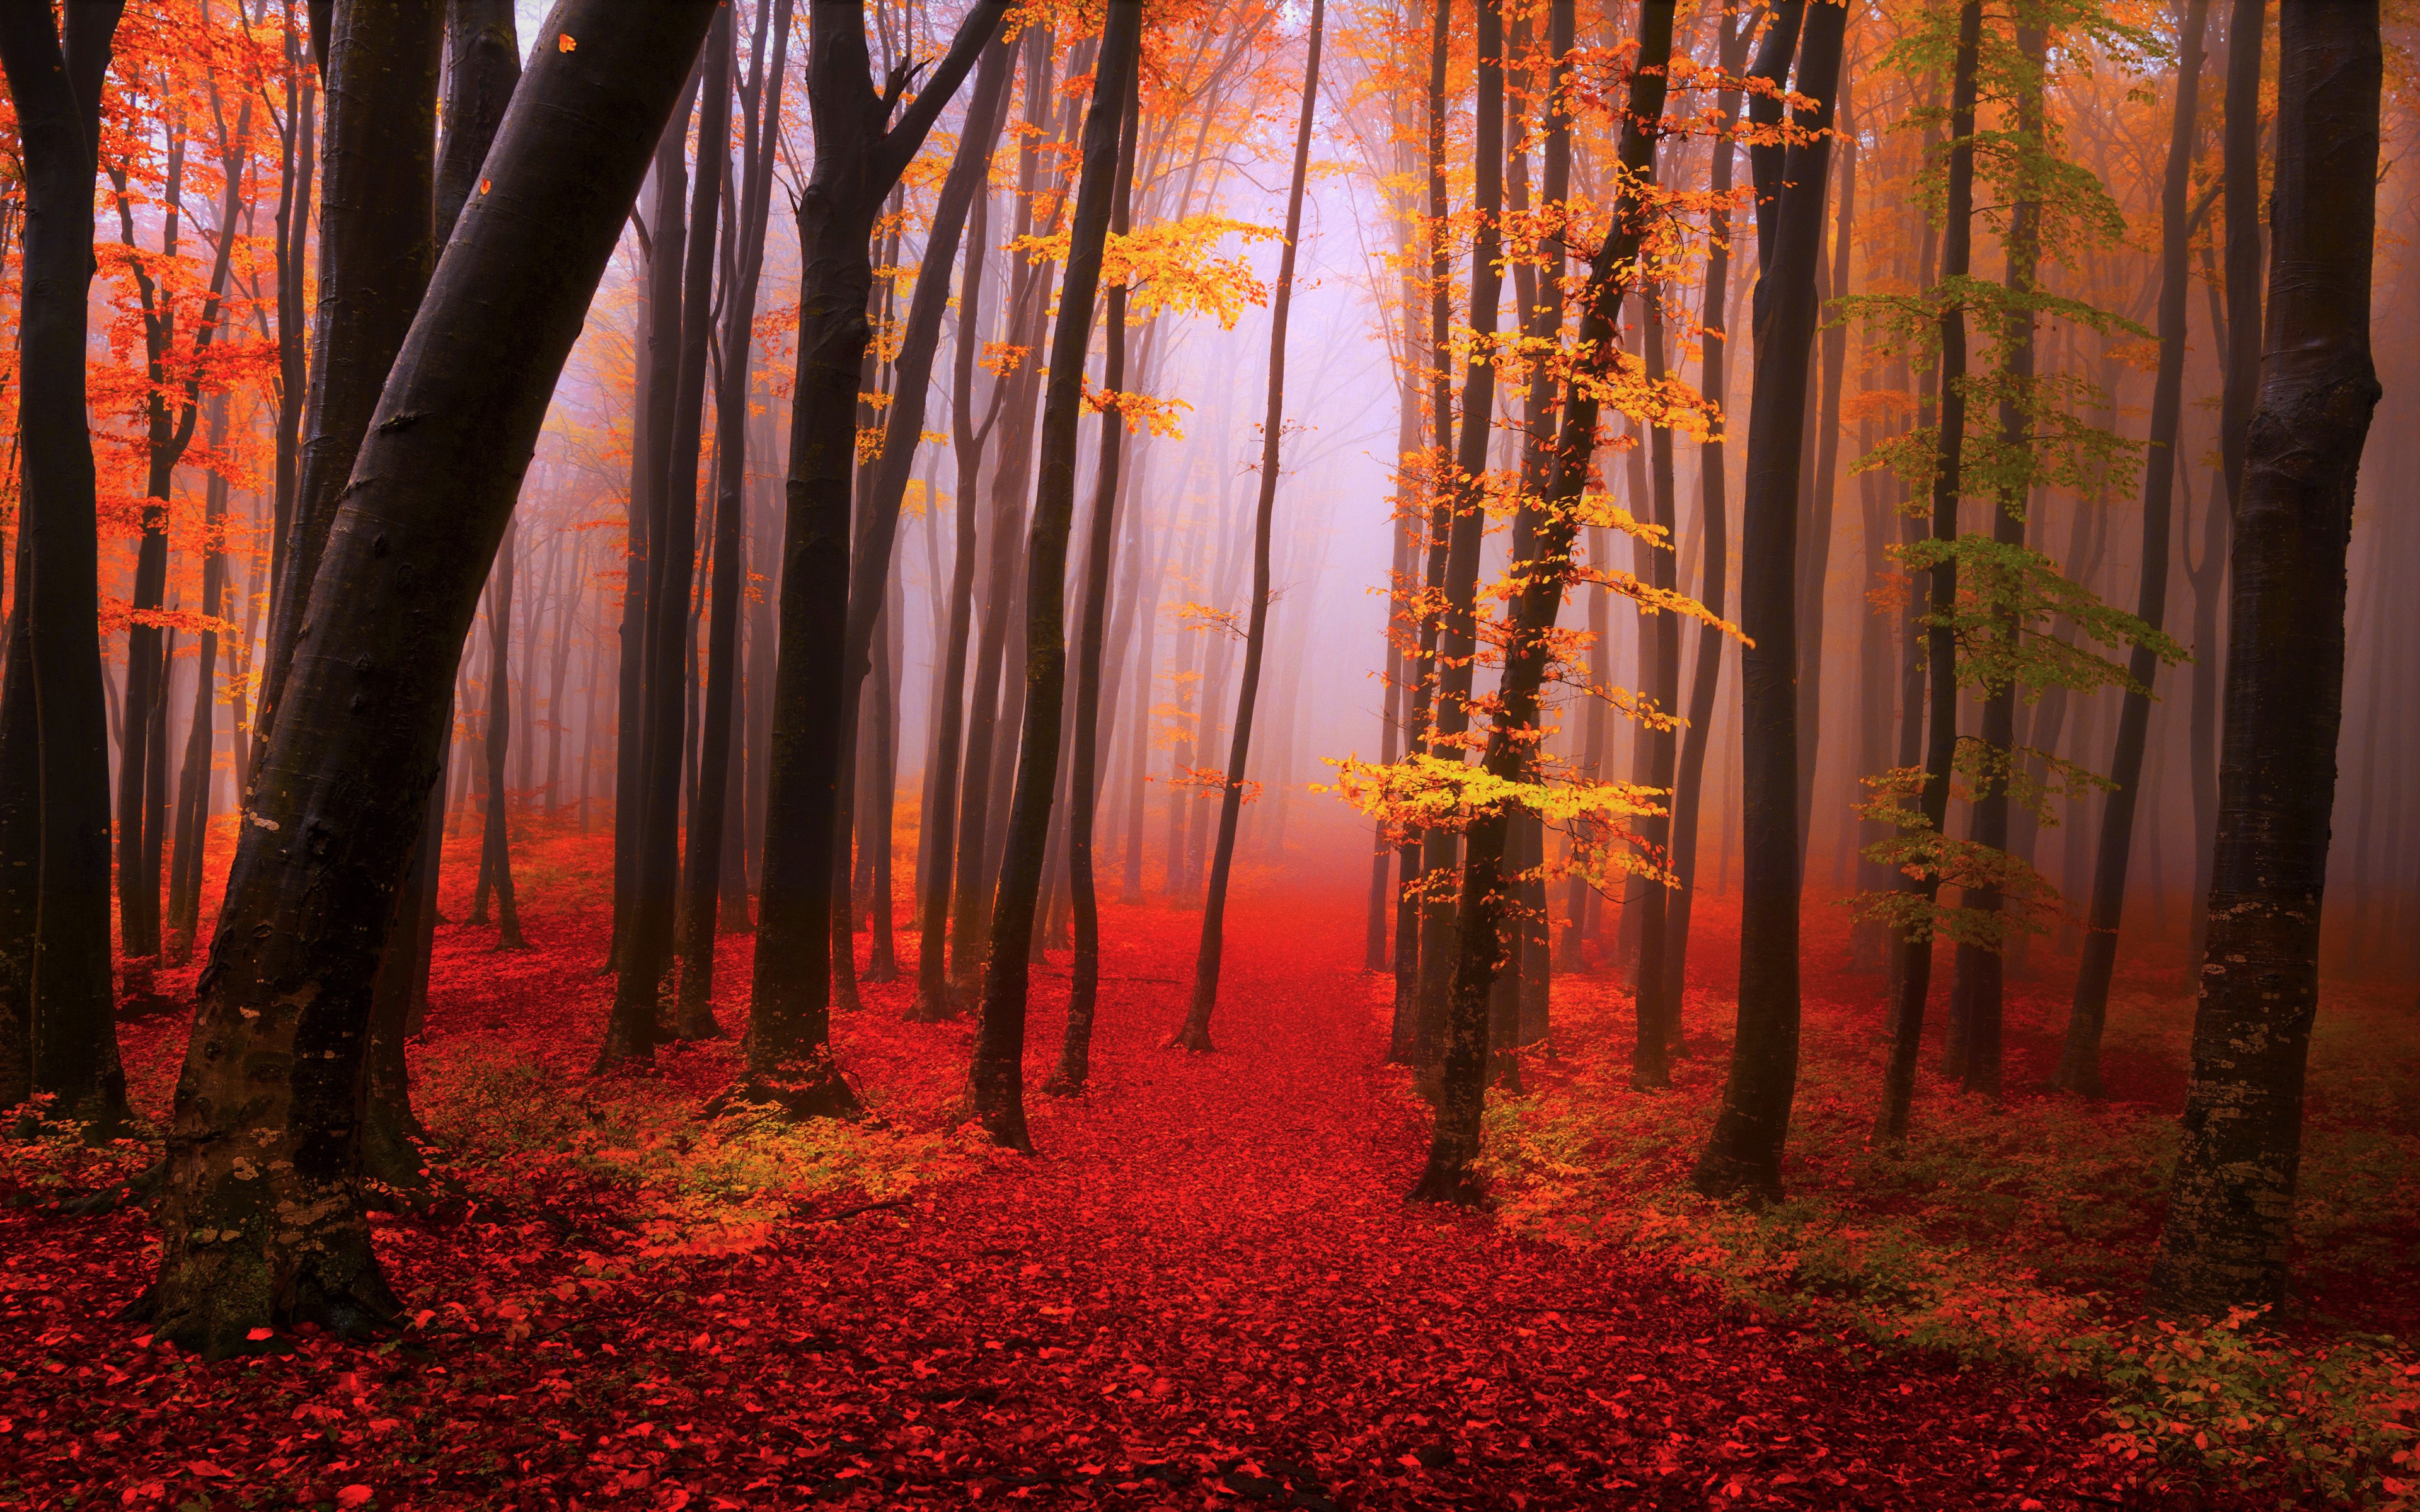 Misty Autumn Forest 4k Ultra HD Wallpaper